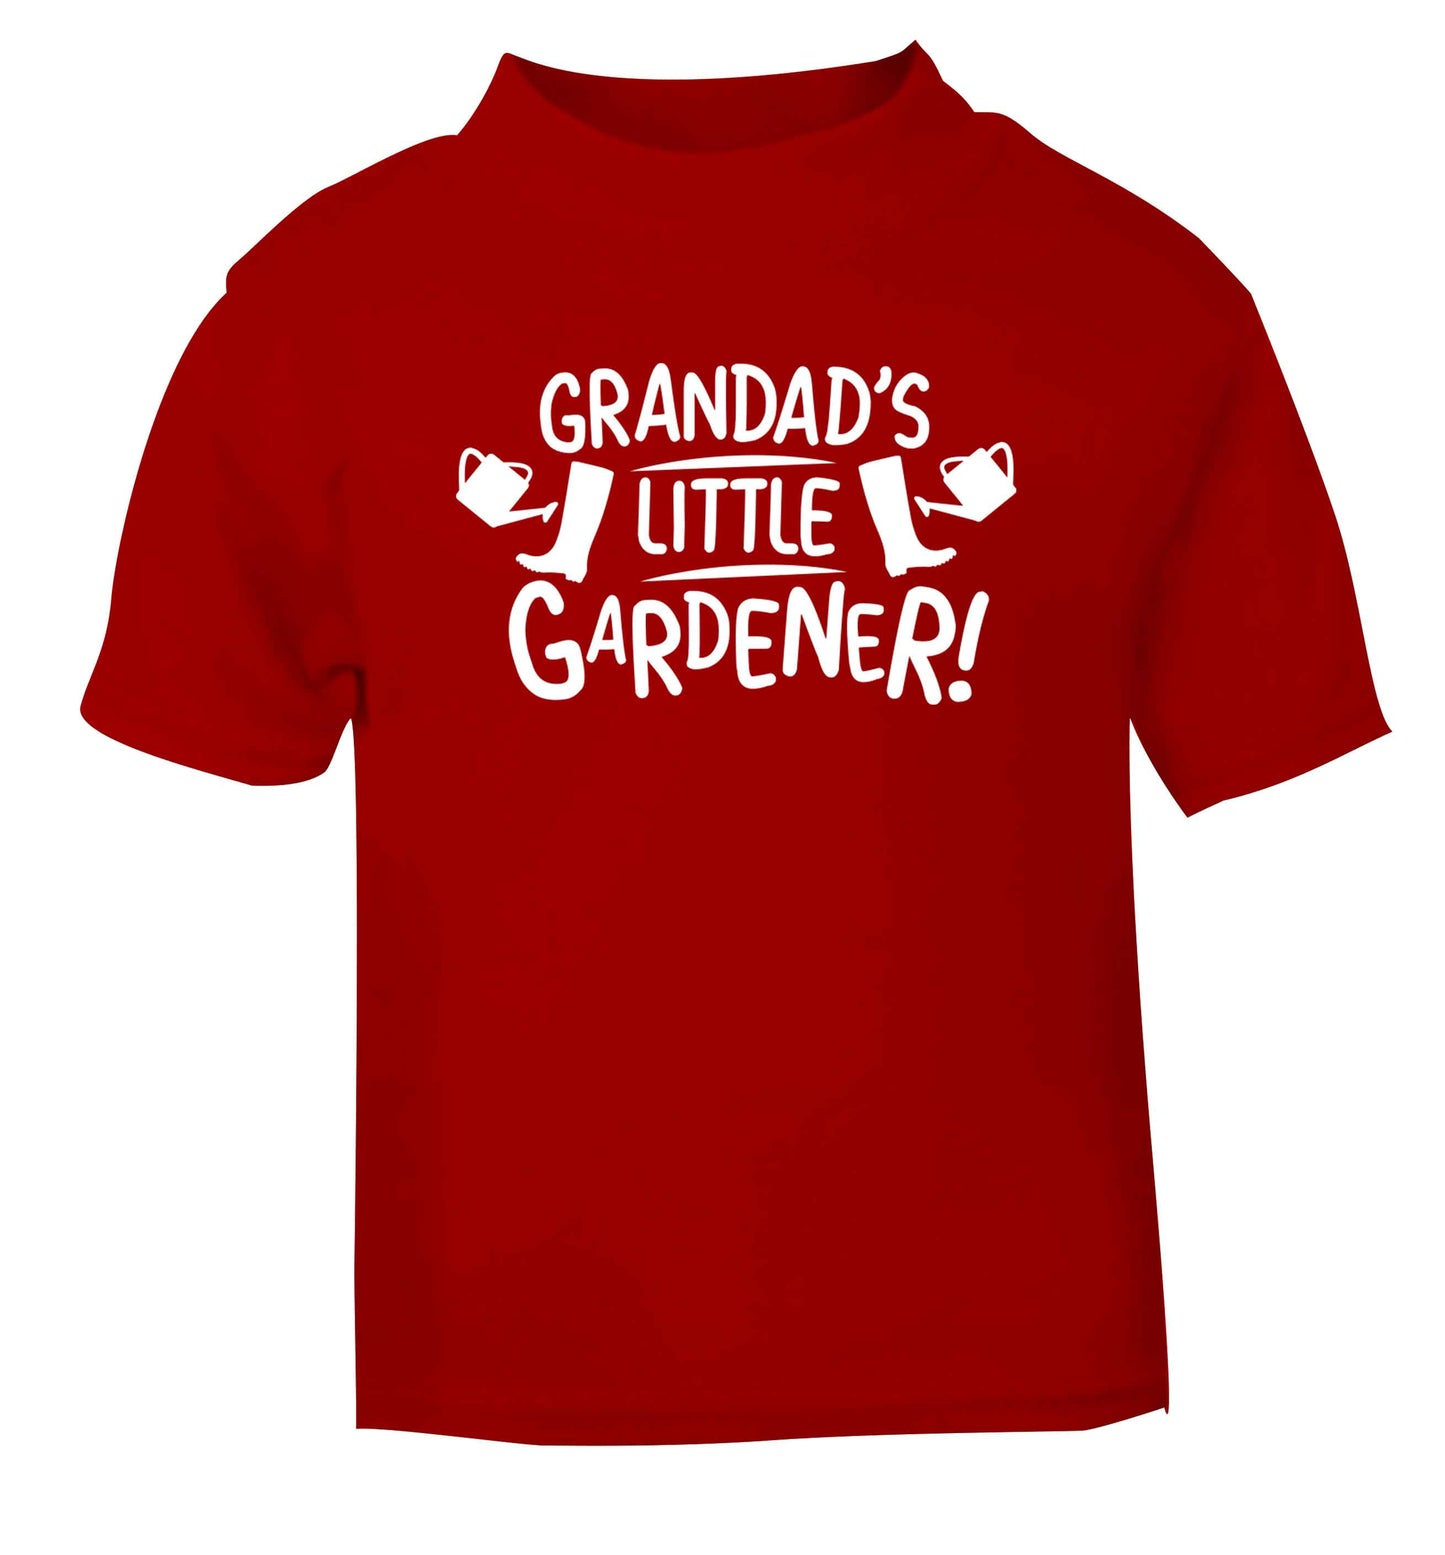 Grandad's little gardener red Baby Toddler Tshirt 2 Years